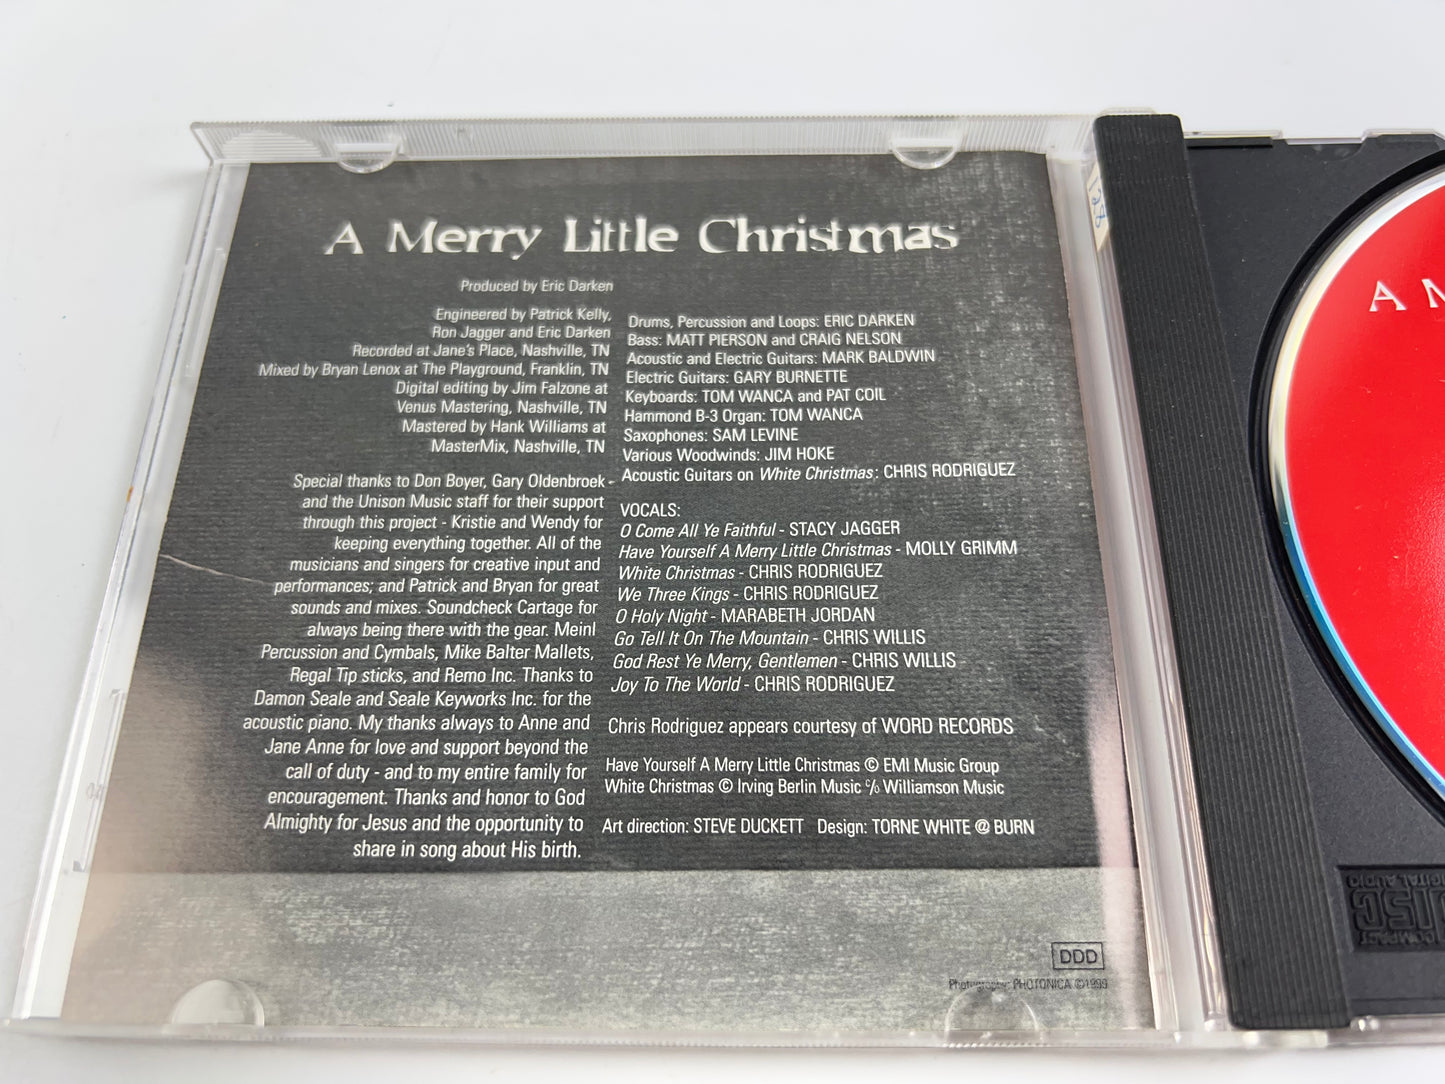 A Merry Little Christmas - Contemporary Pop-Rock Christmas Music CD